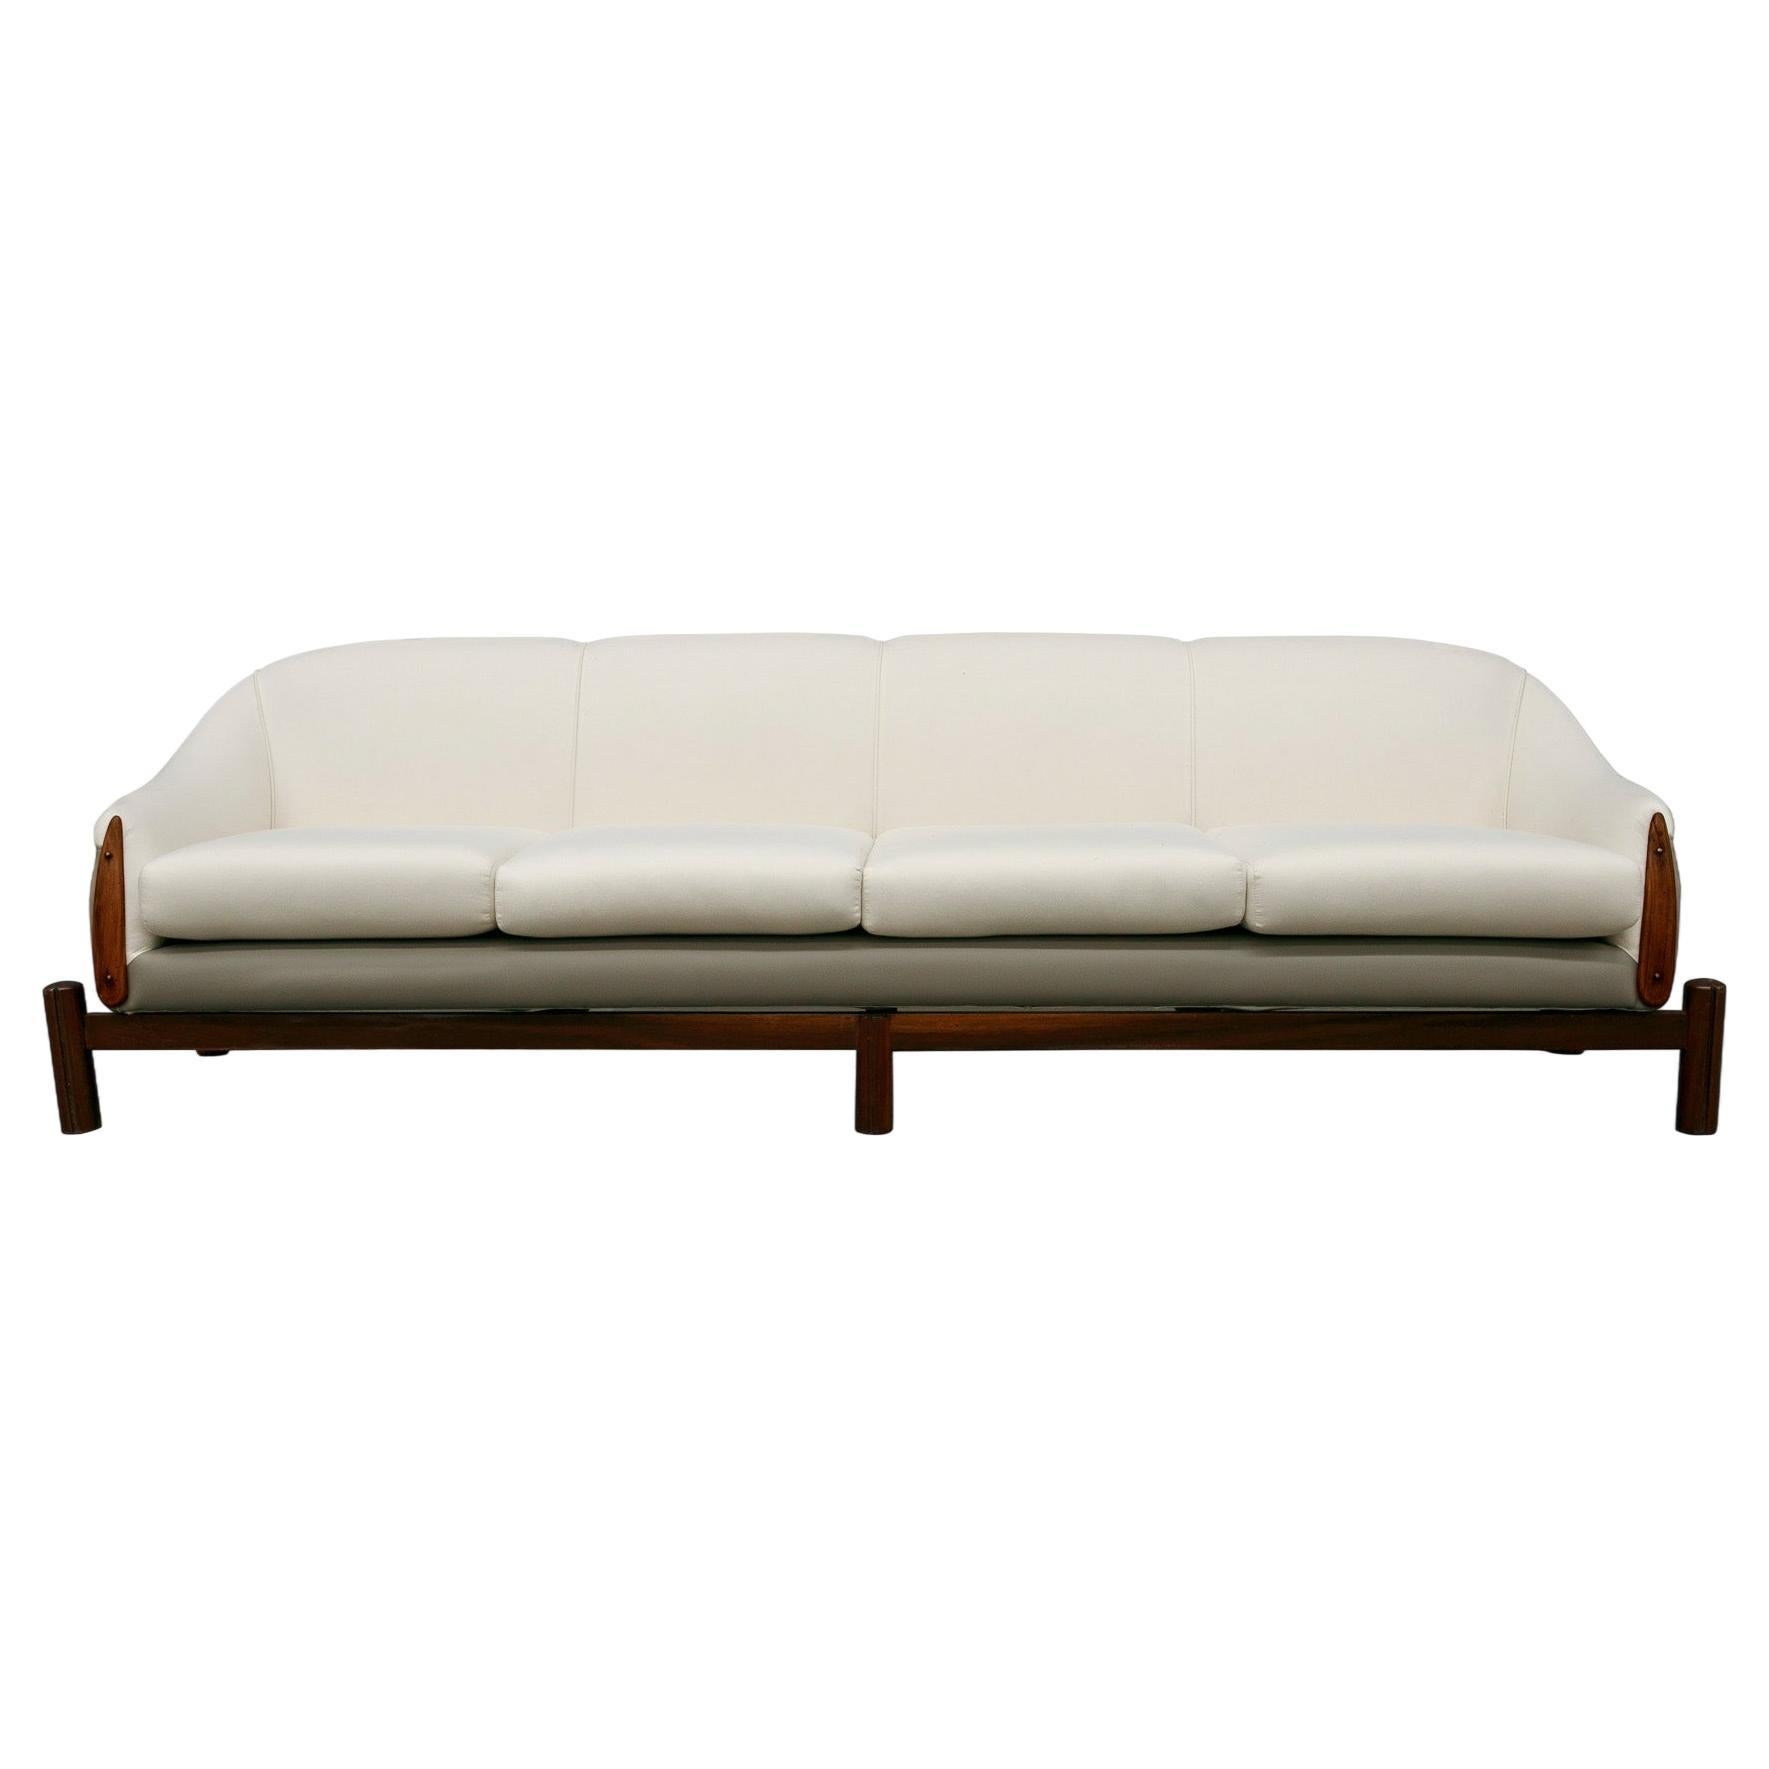 Brazilian Modern Sofa in Hardwood, Grey Leather & White Fabric by Cimo, 1960s